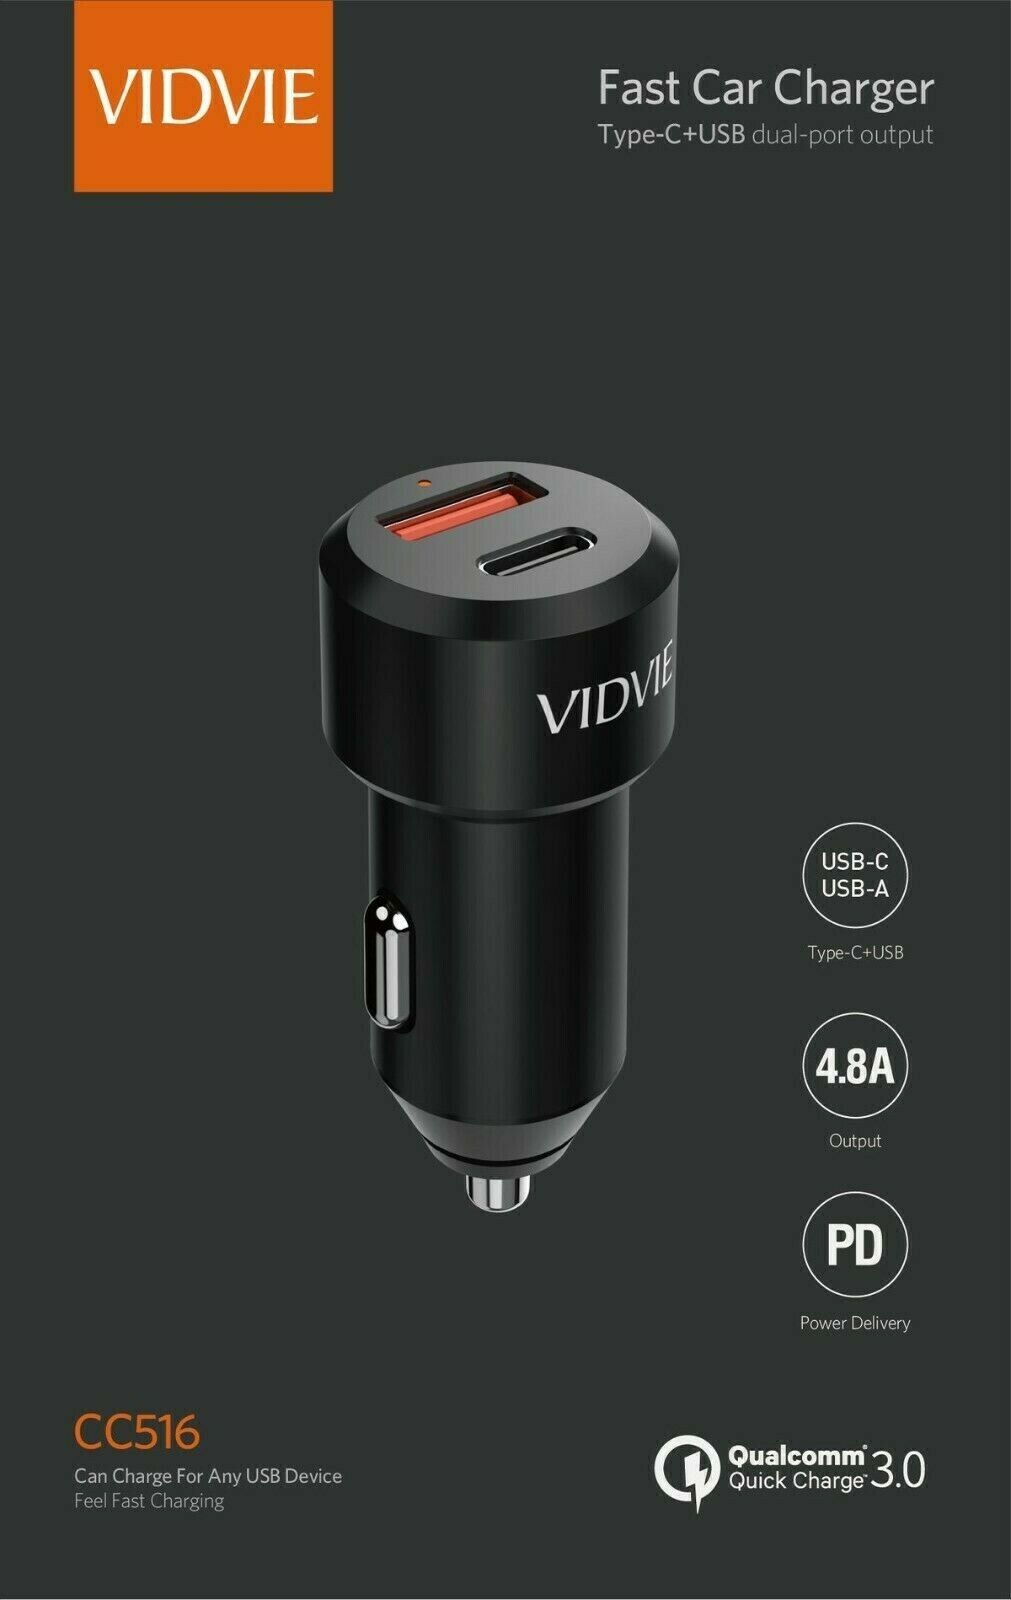 Vidvie Fast Car Charger Type-C+USB CC516